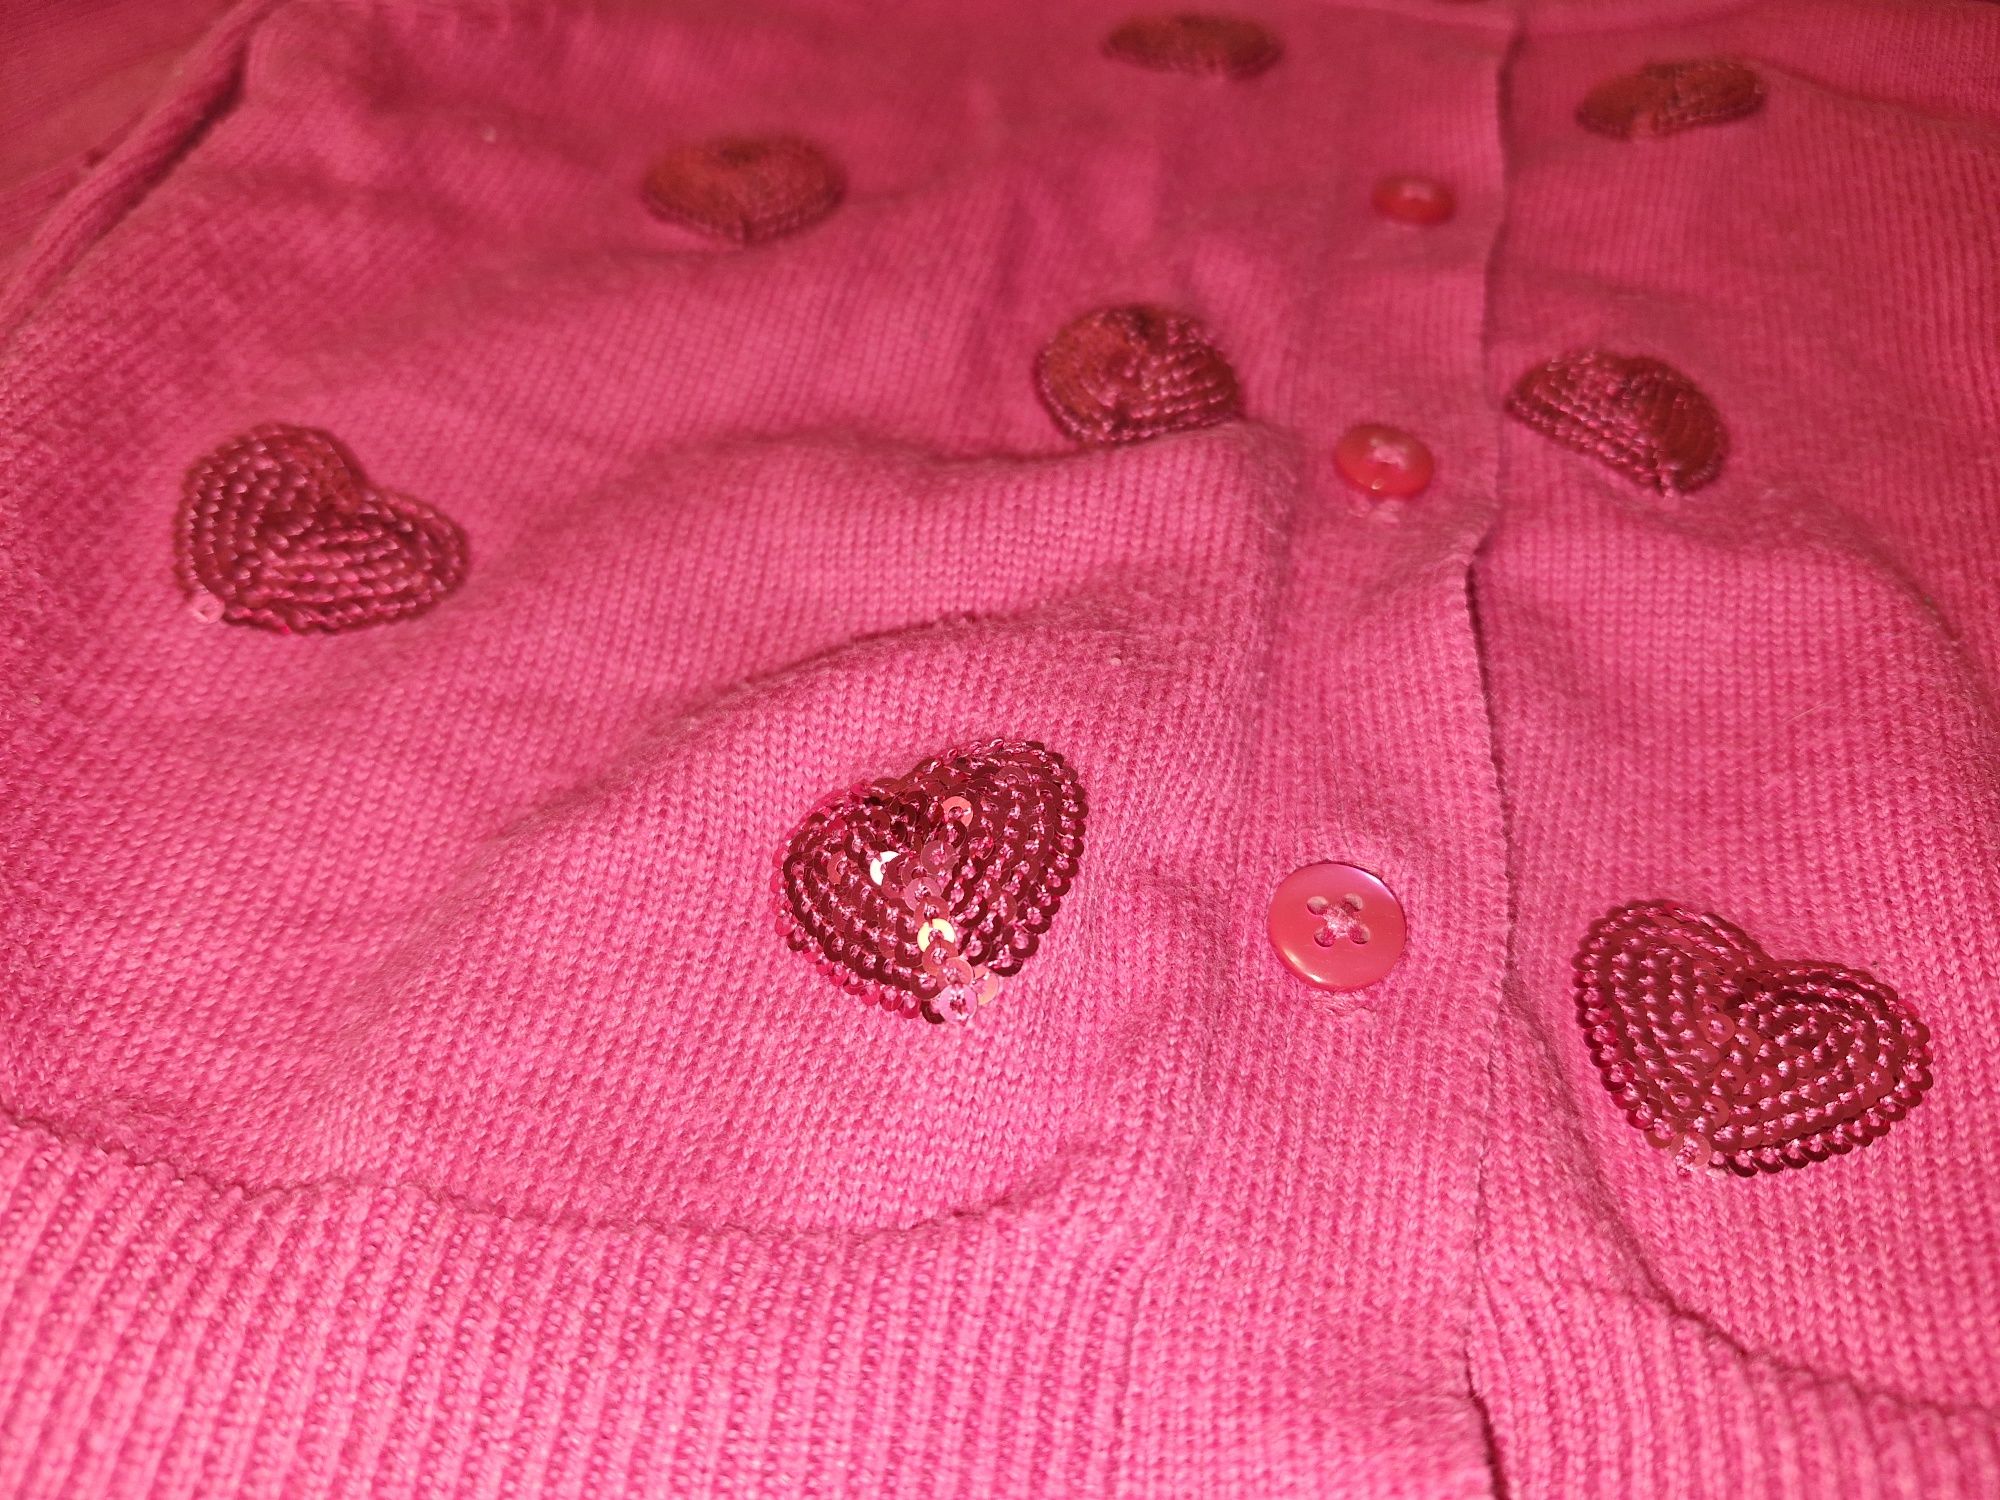 Кофта Children's place р. 7/8 розовая рожева кофтинка болеро пайетки